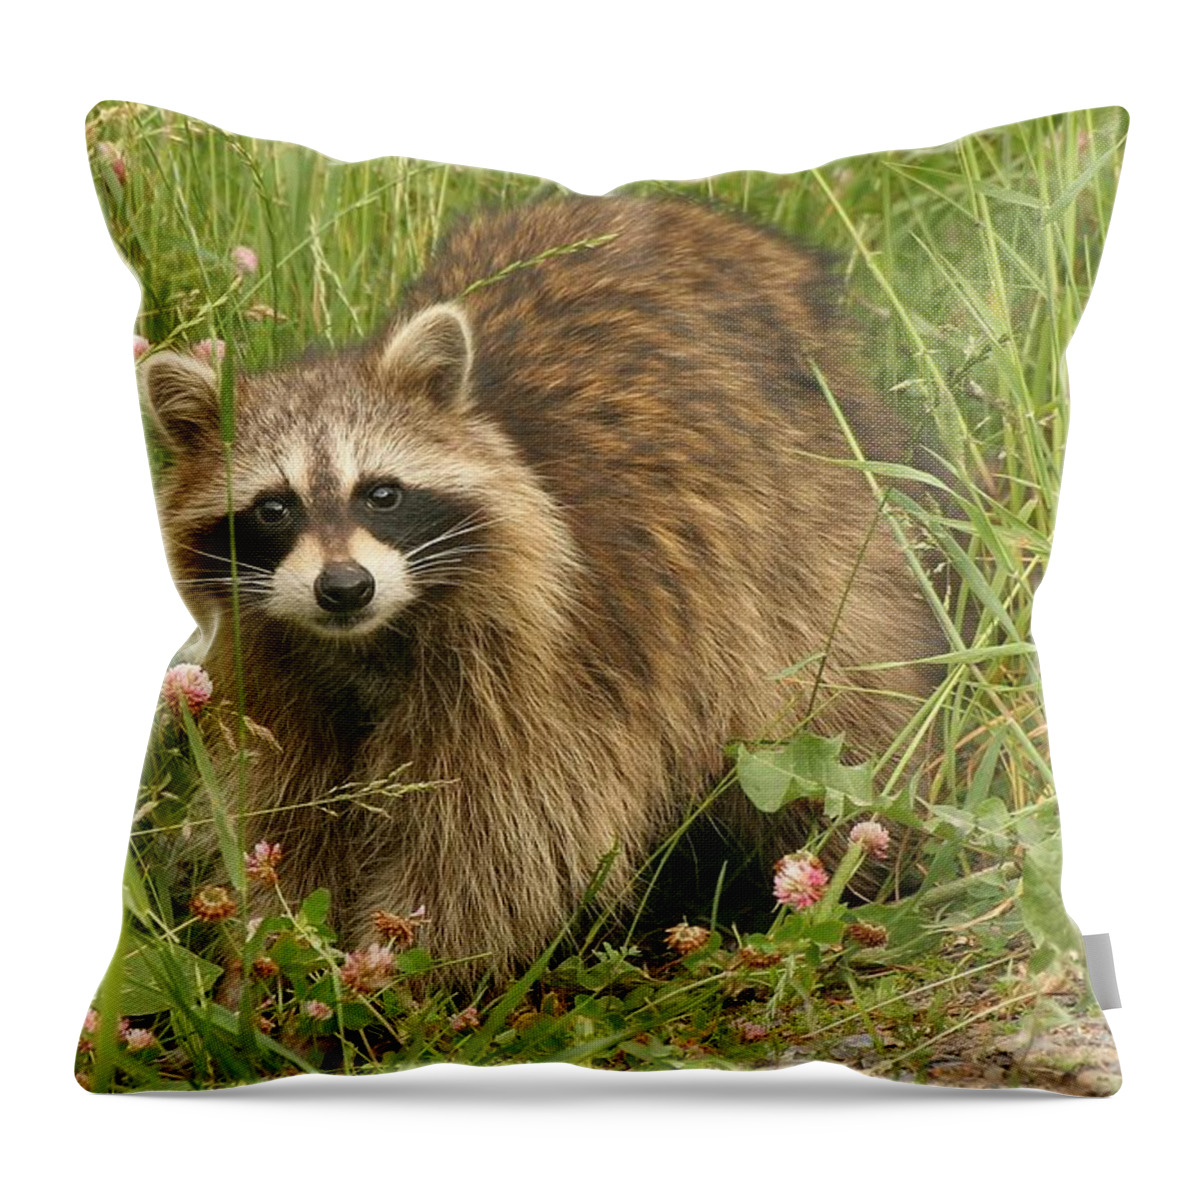 Raccoon Throw Pillow featuring the photograph Raccoon by Doris Potter